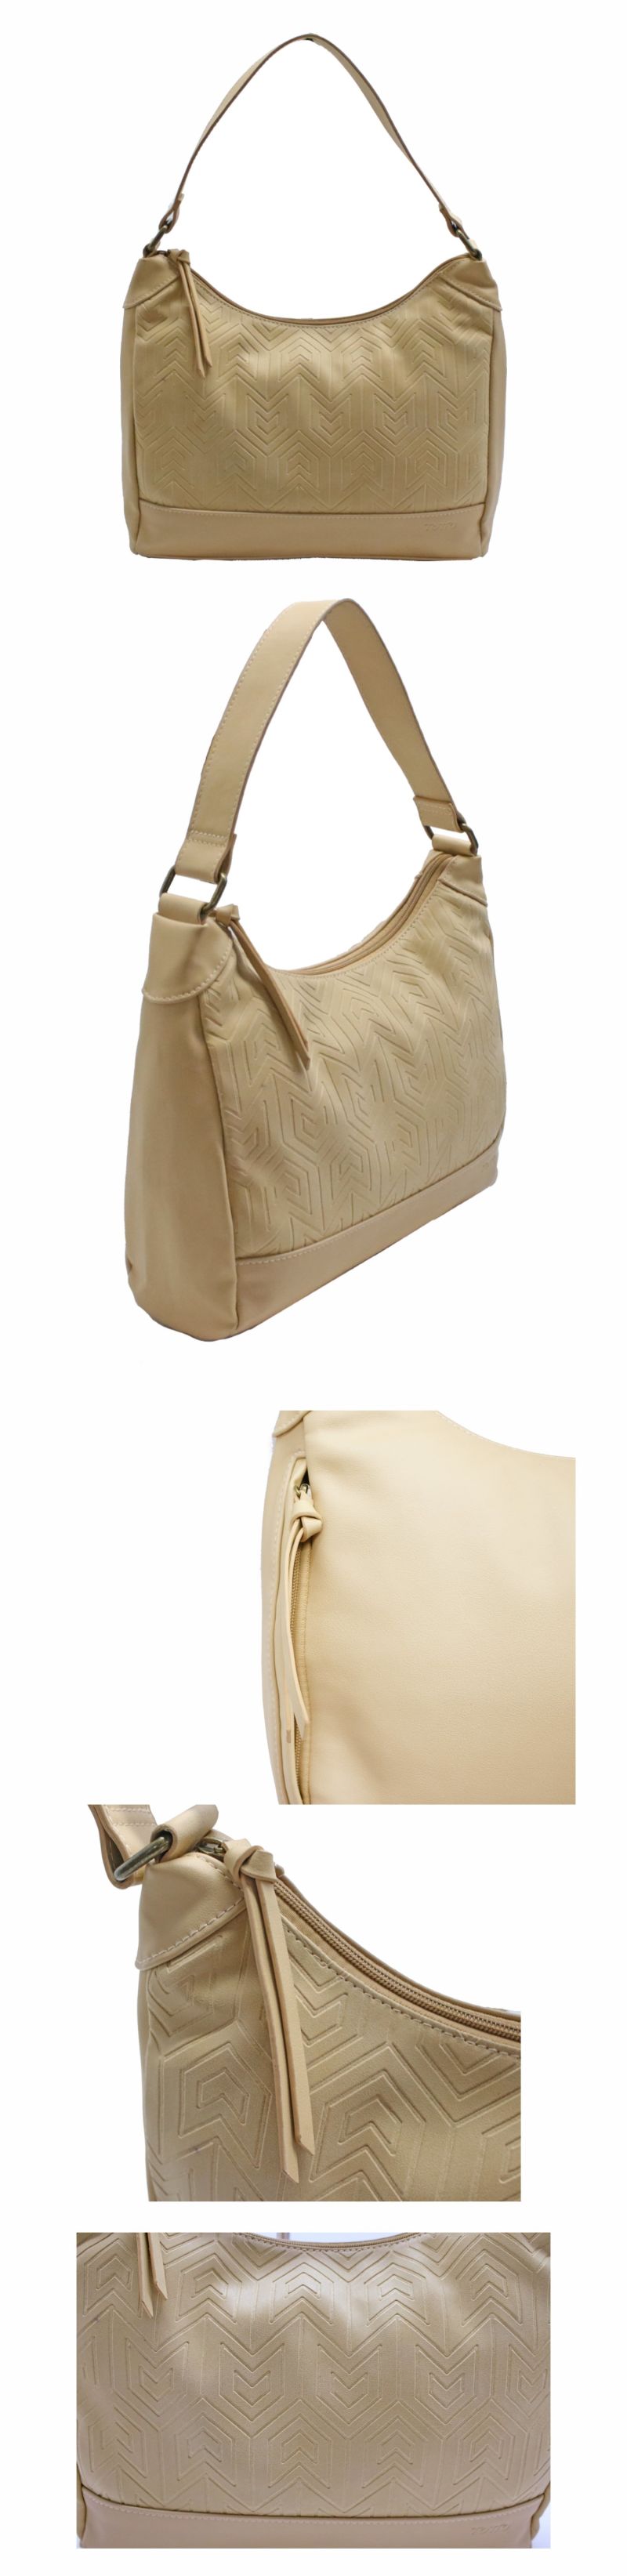 Women Tote Bag Handbag Ladies Fashion Simple Emboss Shoulder Bag